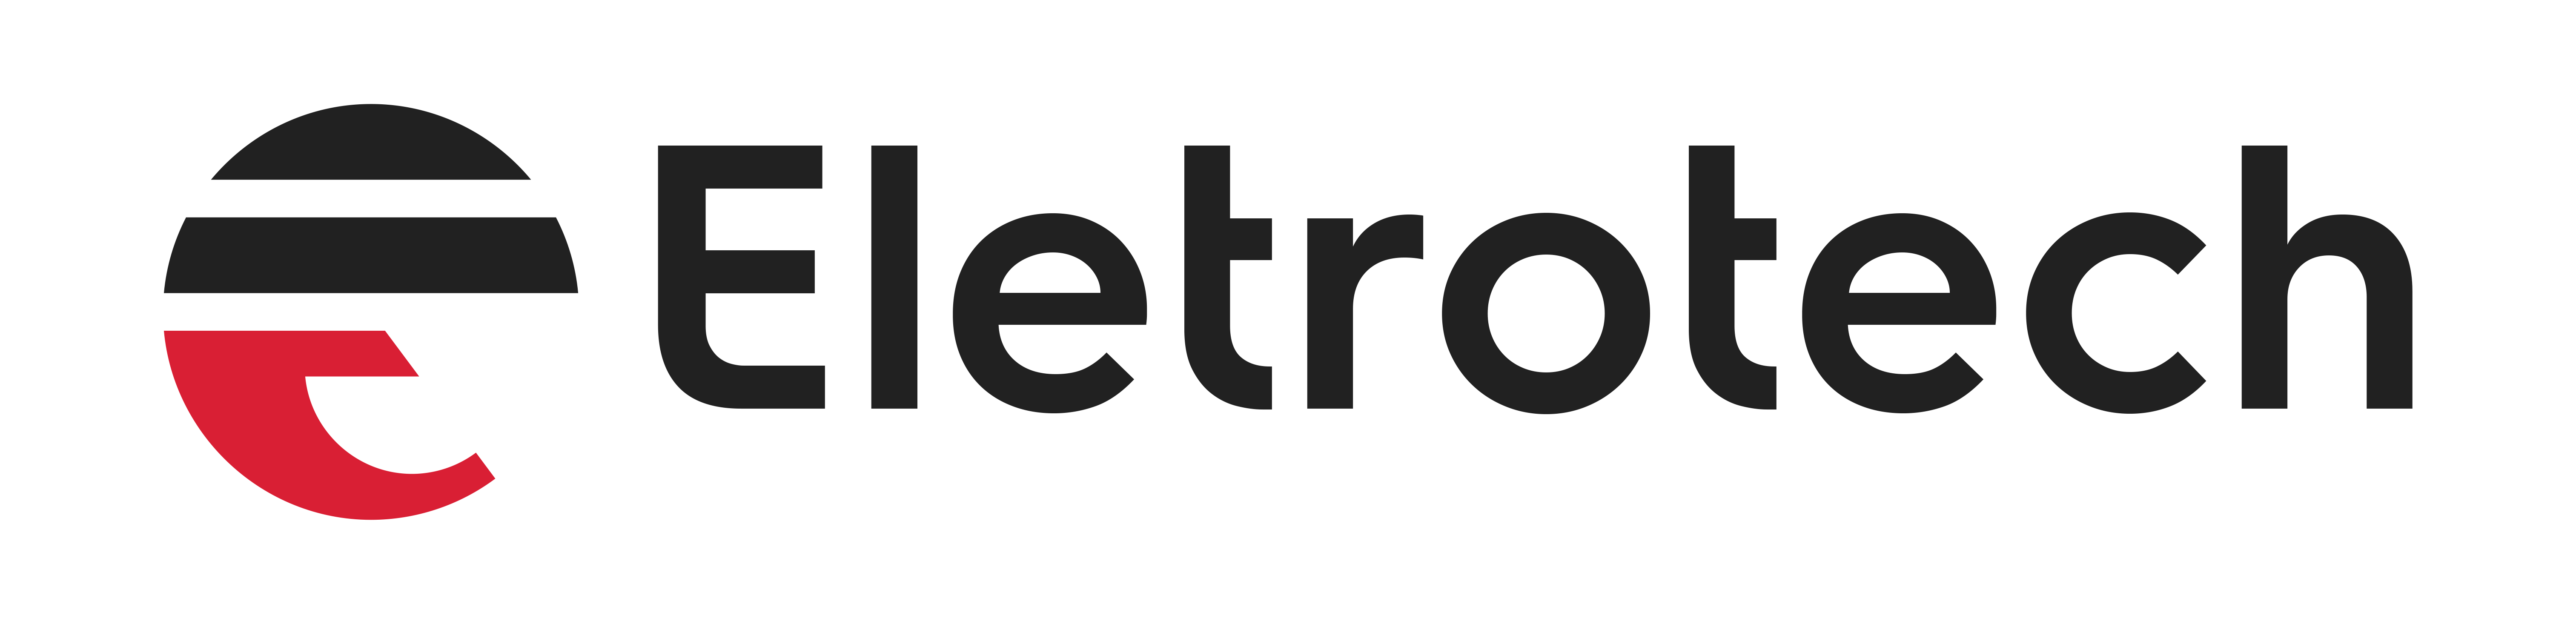 Eletrotech - Logotipo